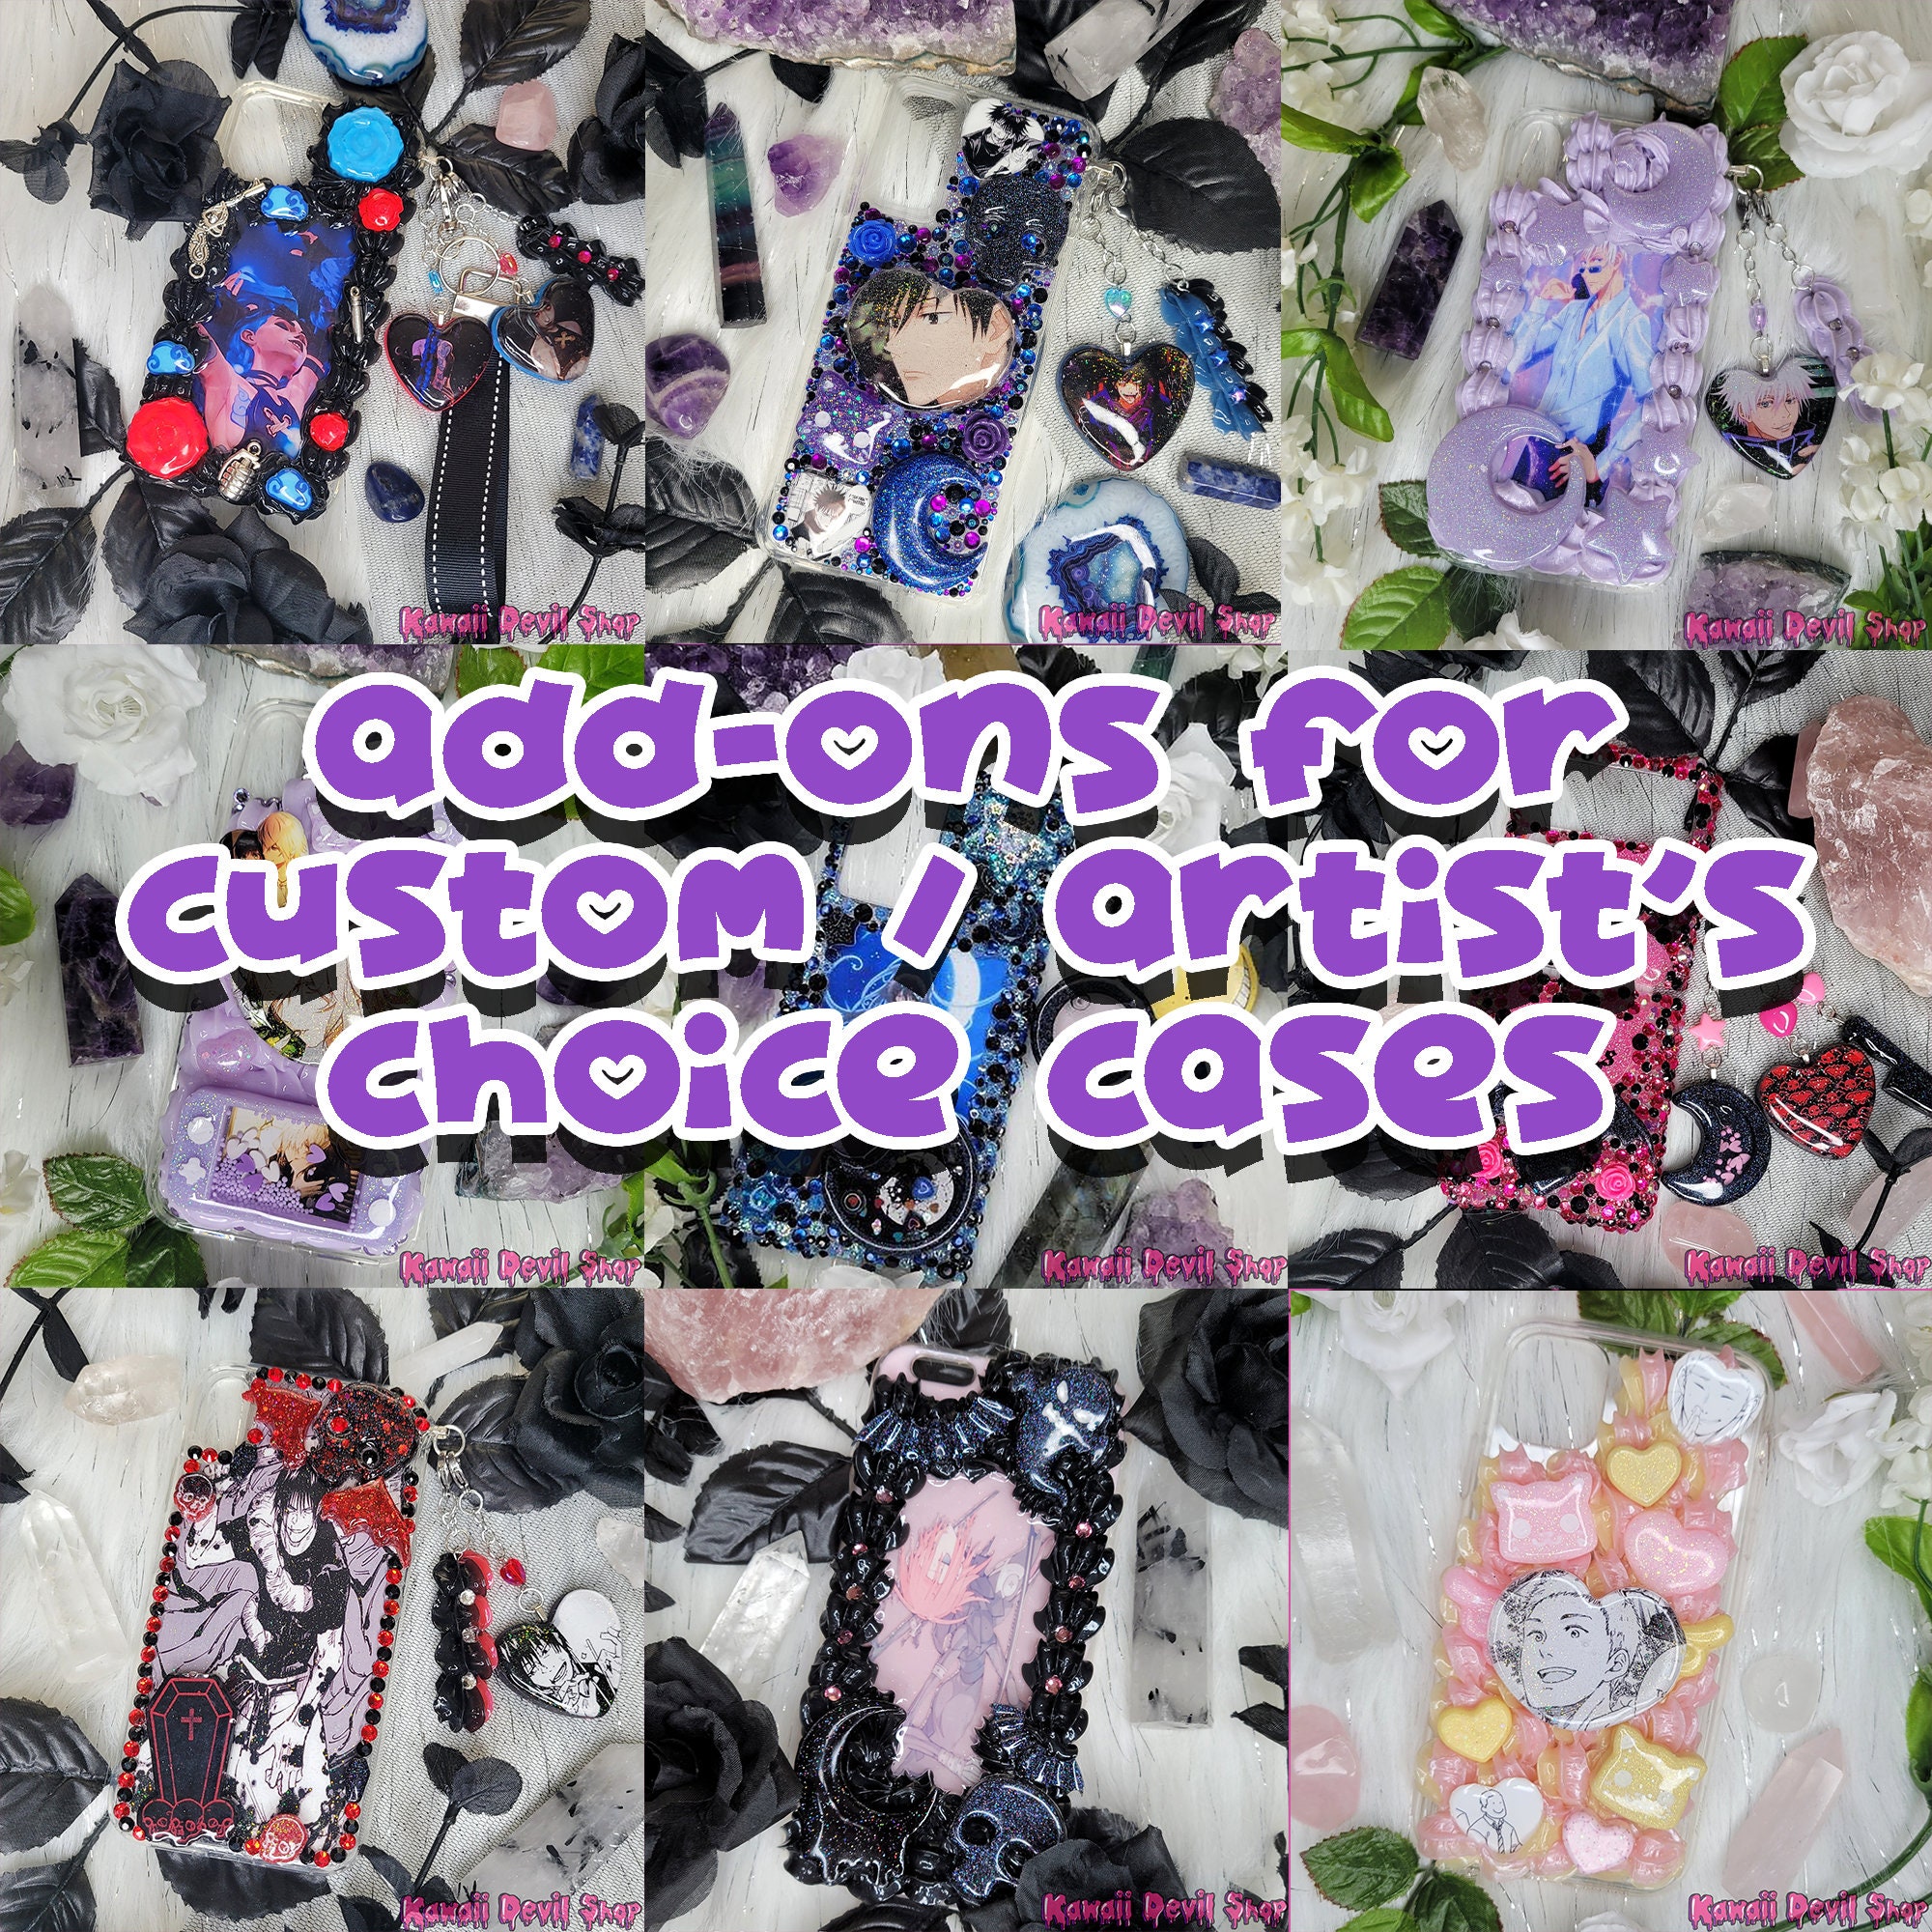 Kawaii Cross Charms with Glitter | Resin Cross Pendant | Cute Catholic  Jewellery DIY | Decoden Embellishments (3pcs / Pink / 19mm x 33mm)